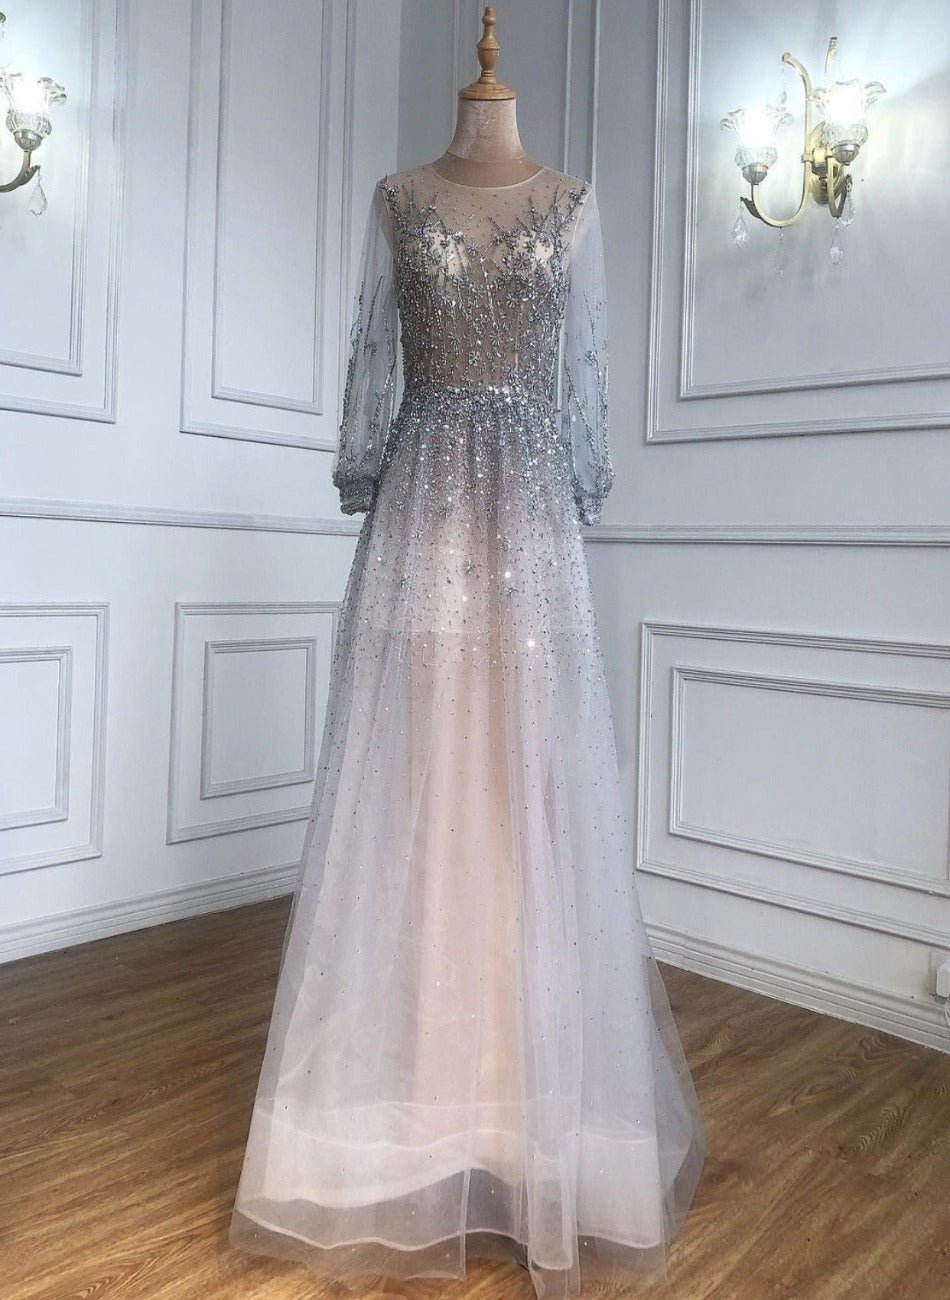 Micaela Silver Luxury A-Line Formal Evening Dress - Mscooco.co.uk